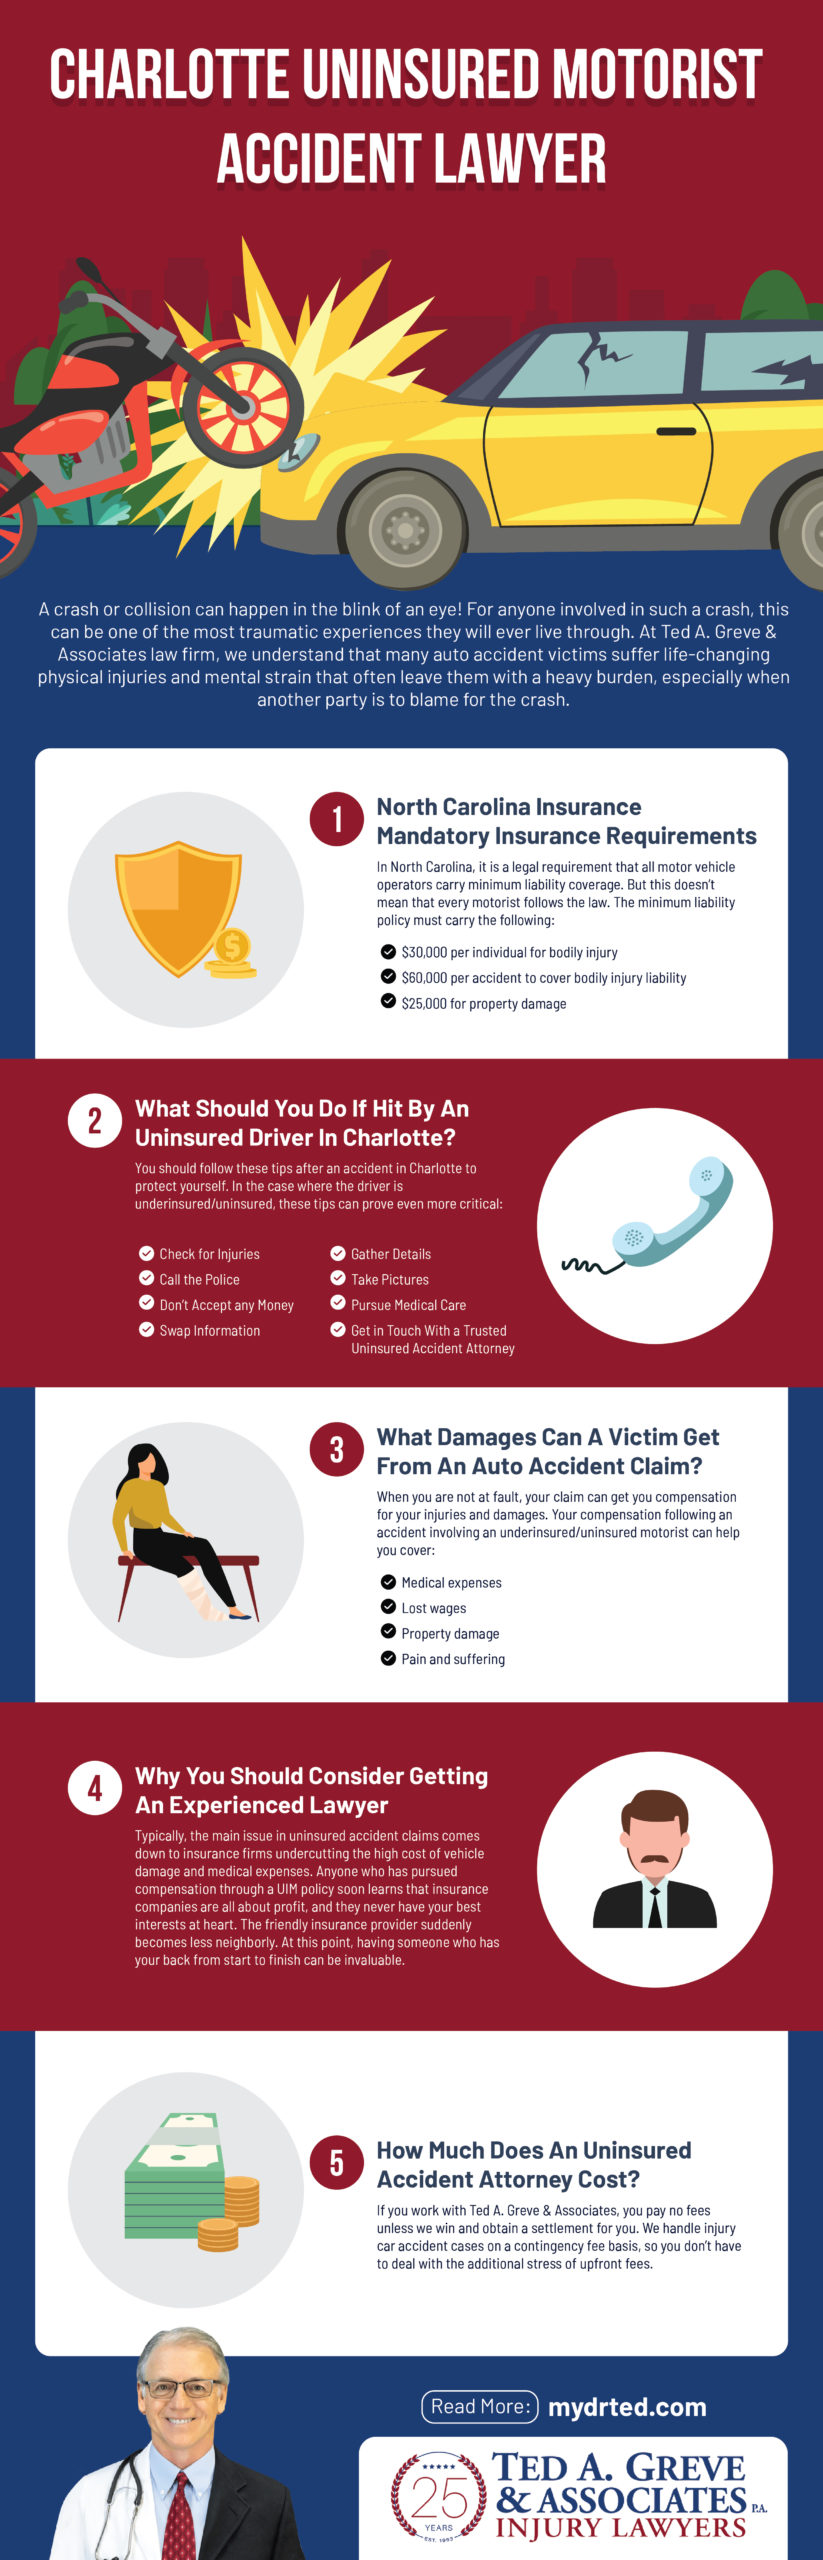 Ted Greve Charlotte Uninsured Motorist Accident Infographic